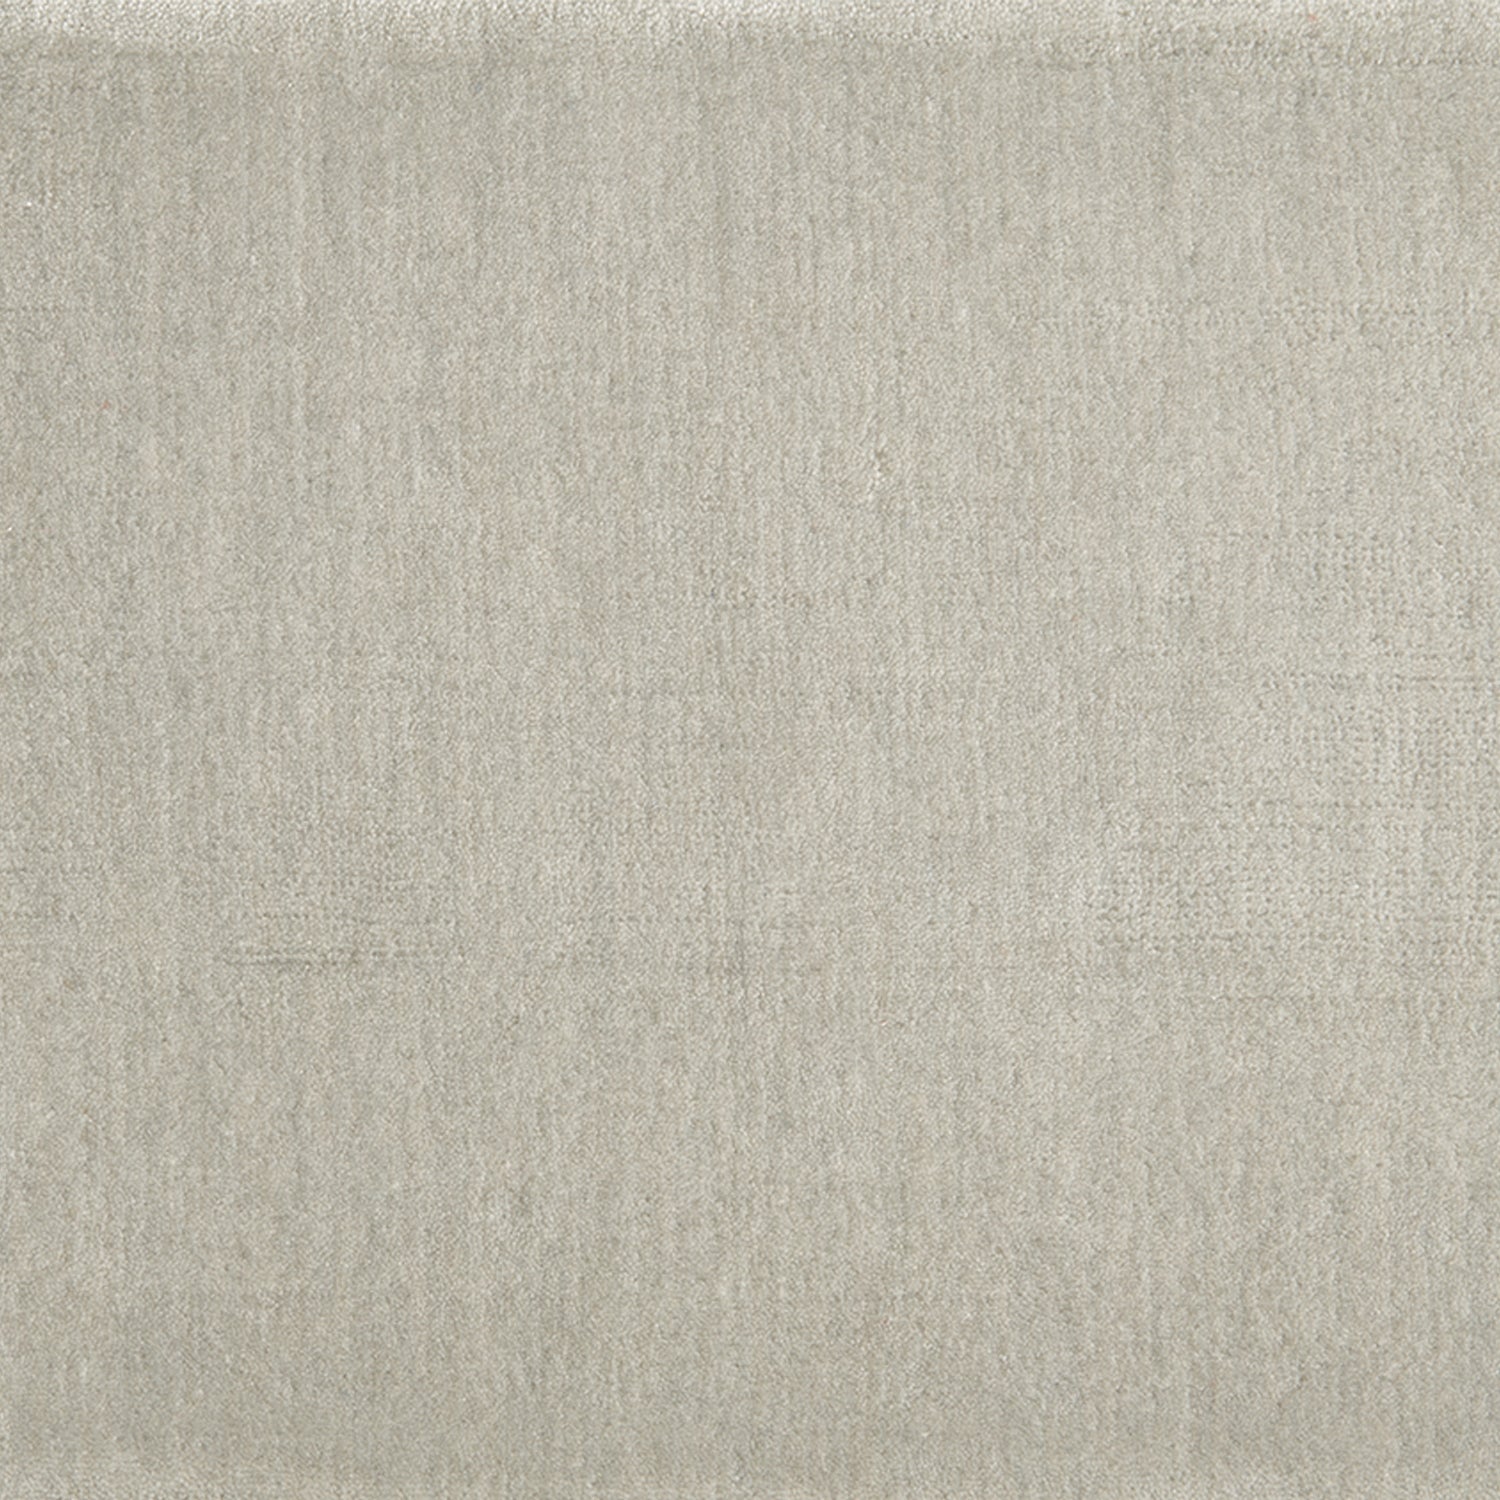 Nylon broadloom carpet swatch in a cut pile texture in light gray.